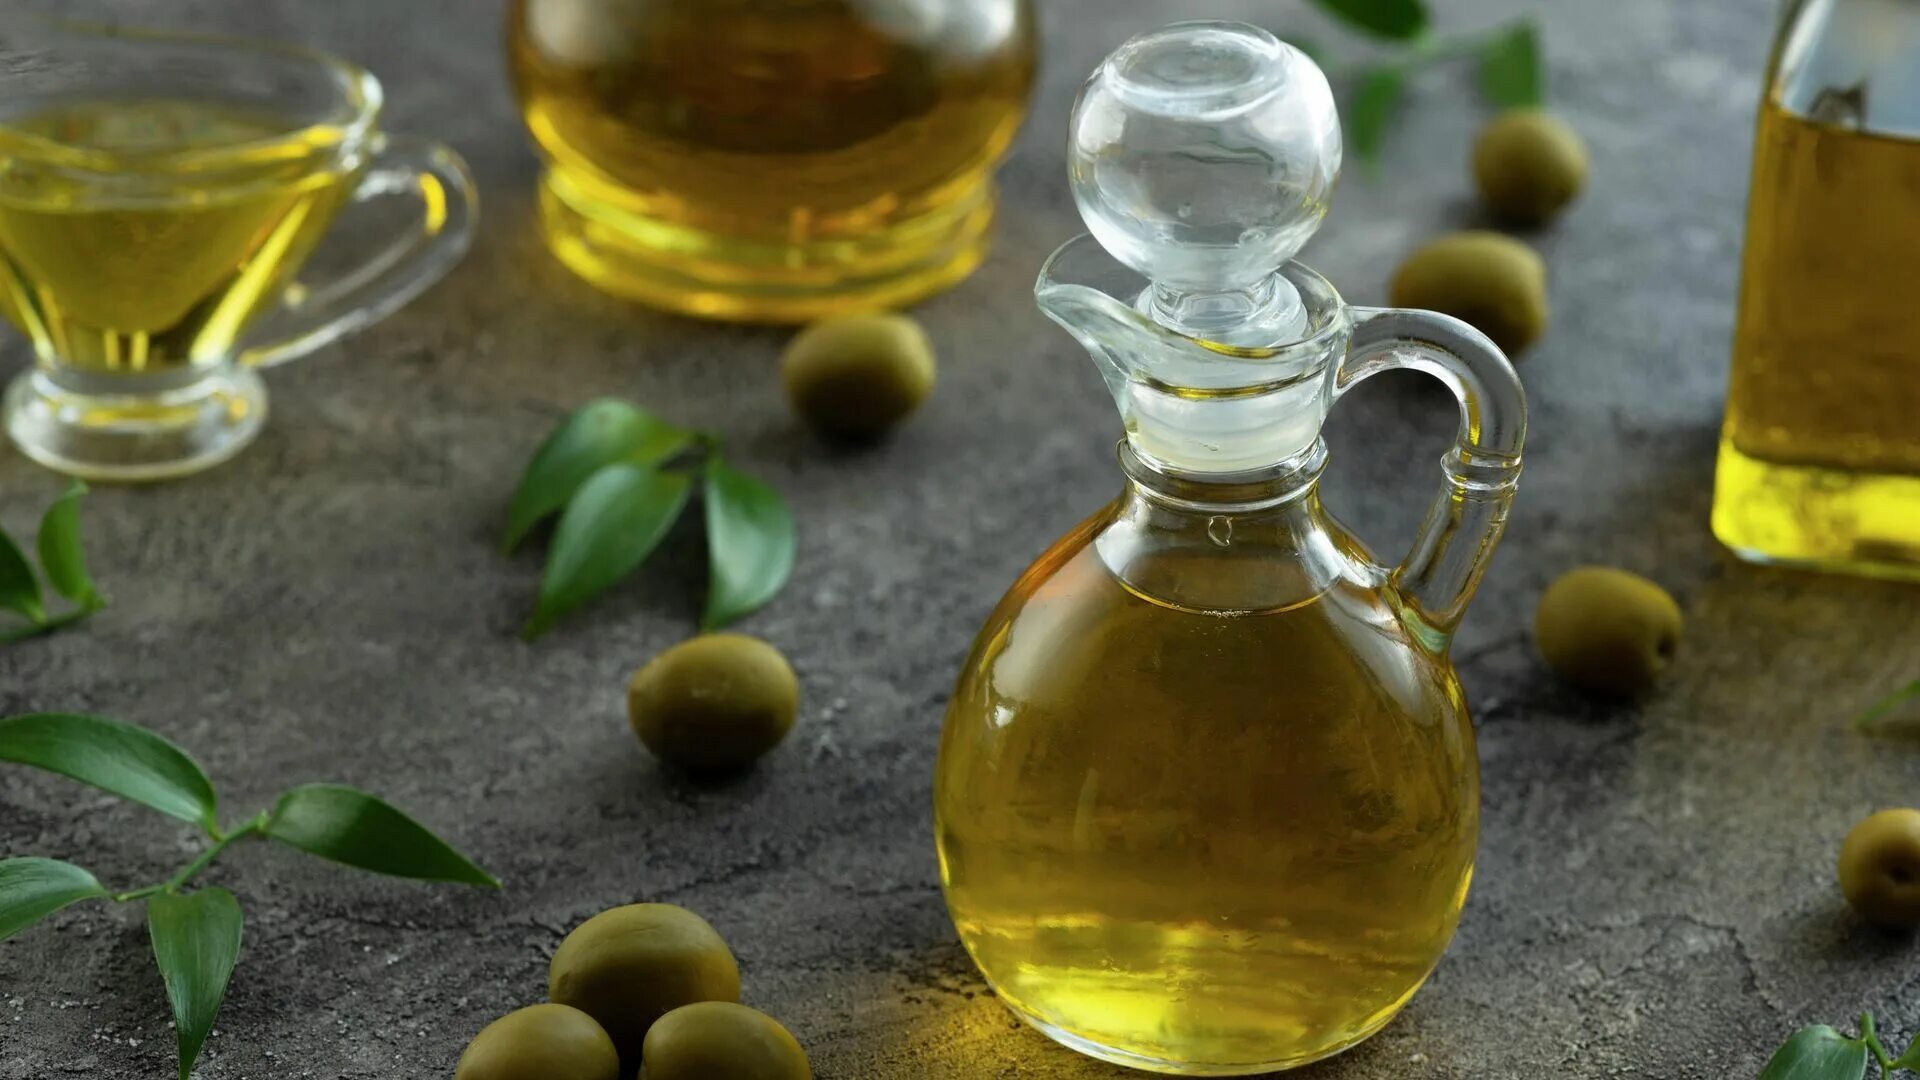 20 оливковое масло. Олив Ойл масло оливковое. Olive Oil масло оливковое. Лучшие оливковые масла. Цвет оливкового масла.